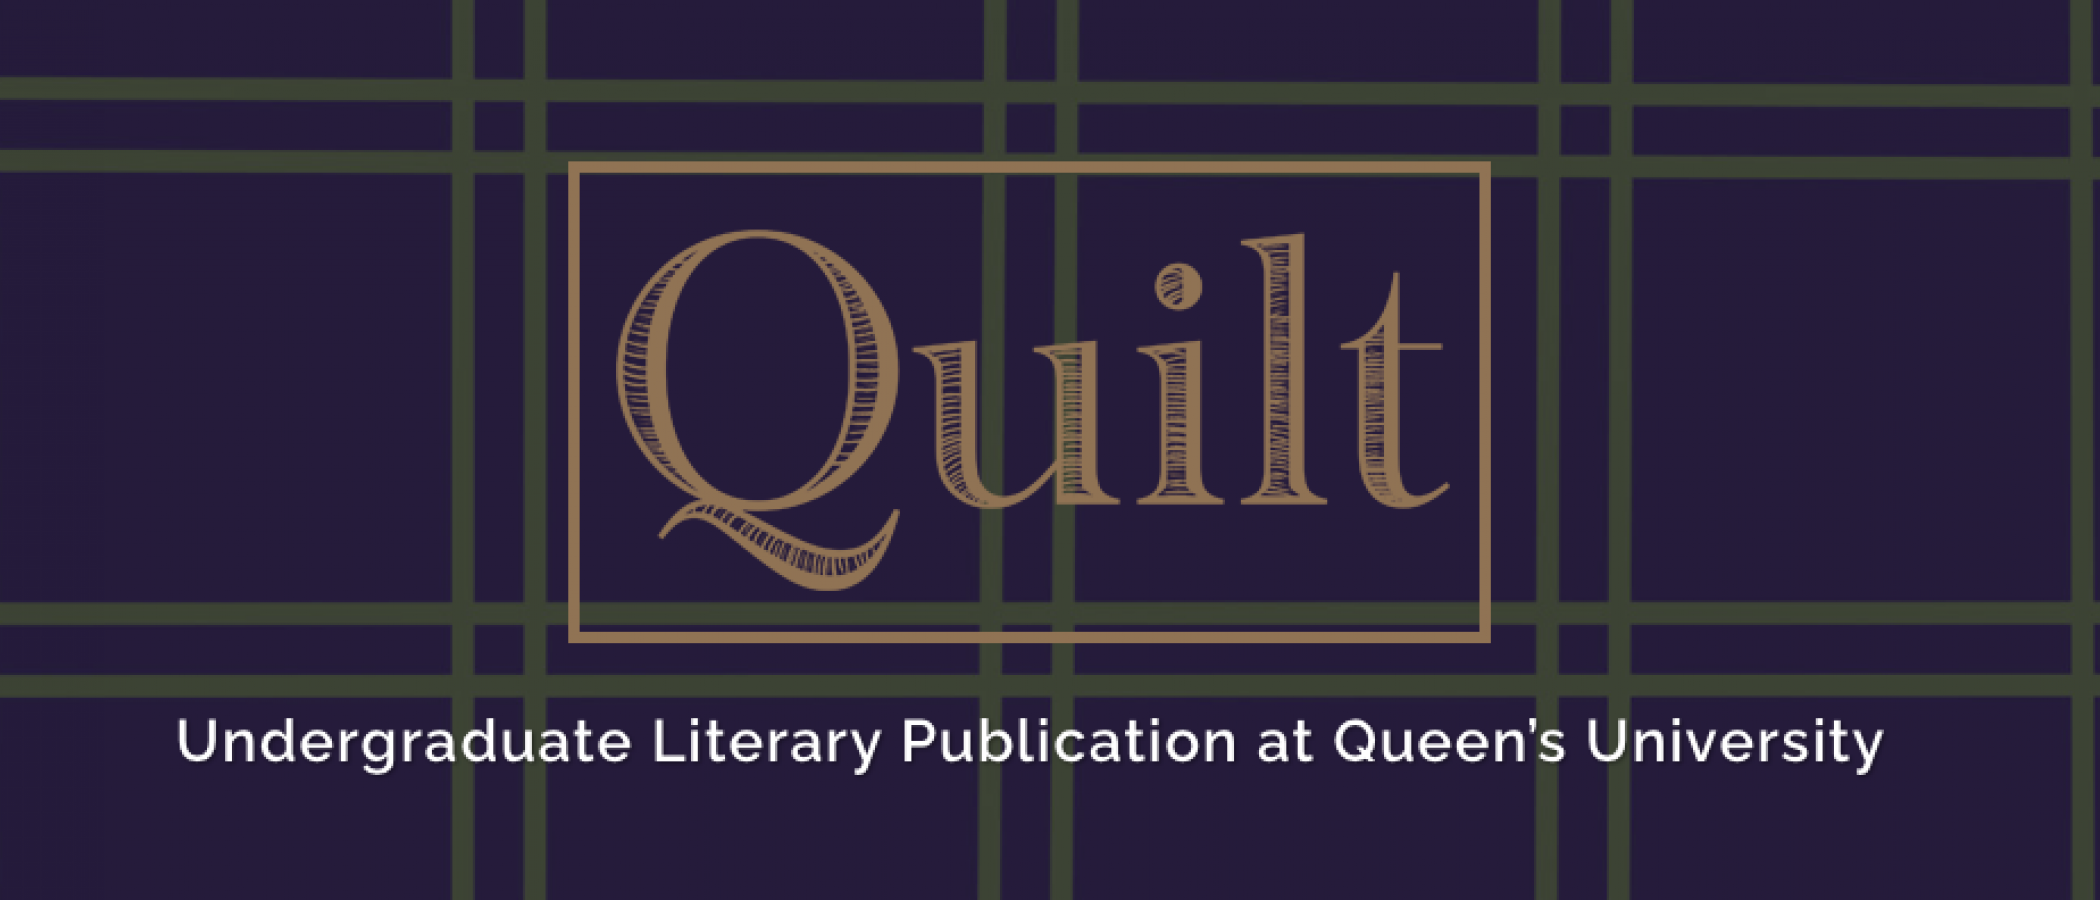 quilt logo 